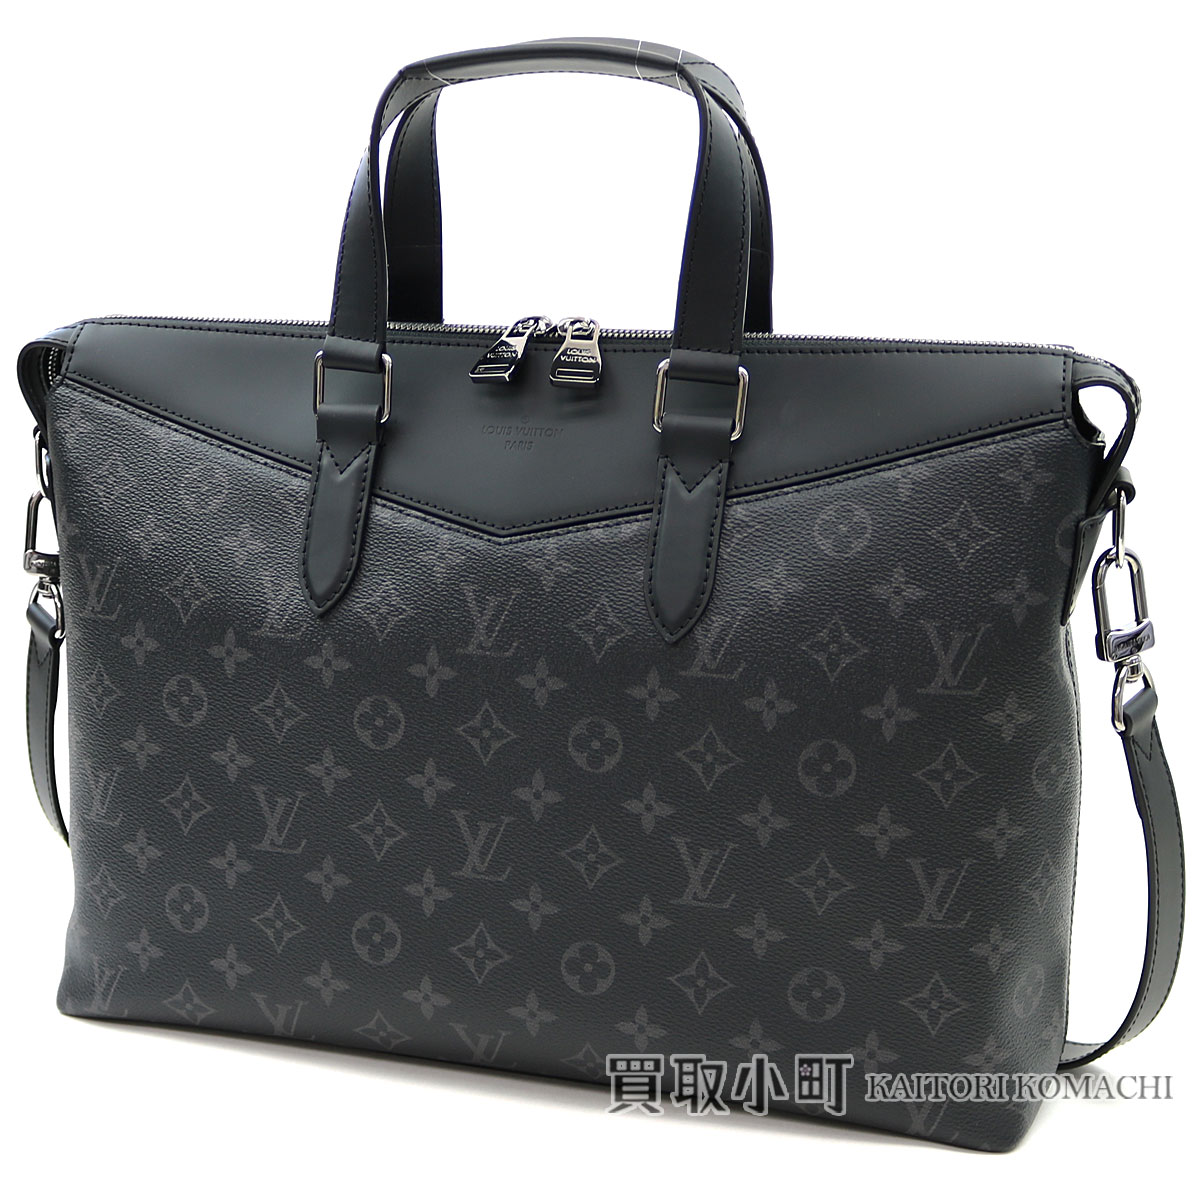 KAITORIKOMACHI: Louis Vuitton M40566 briefcase Explorer monogram eclipse 2WAY shoulder bag ...